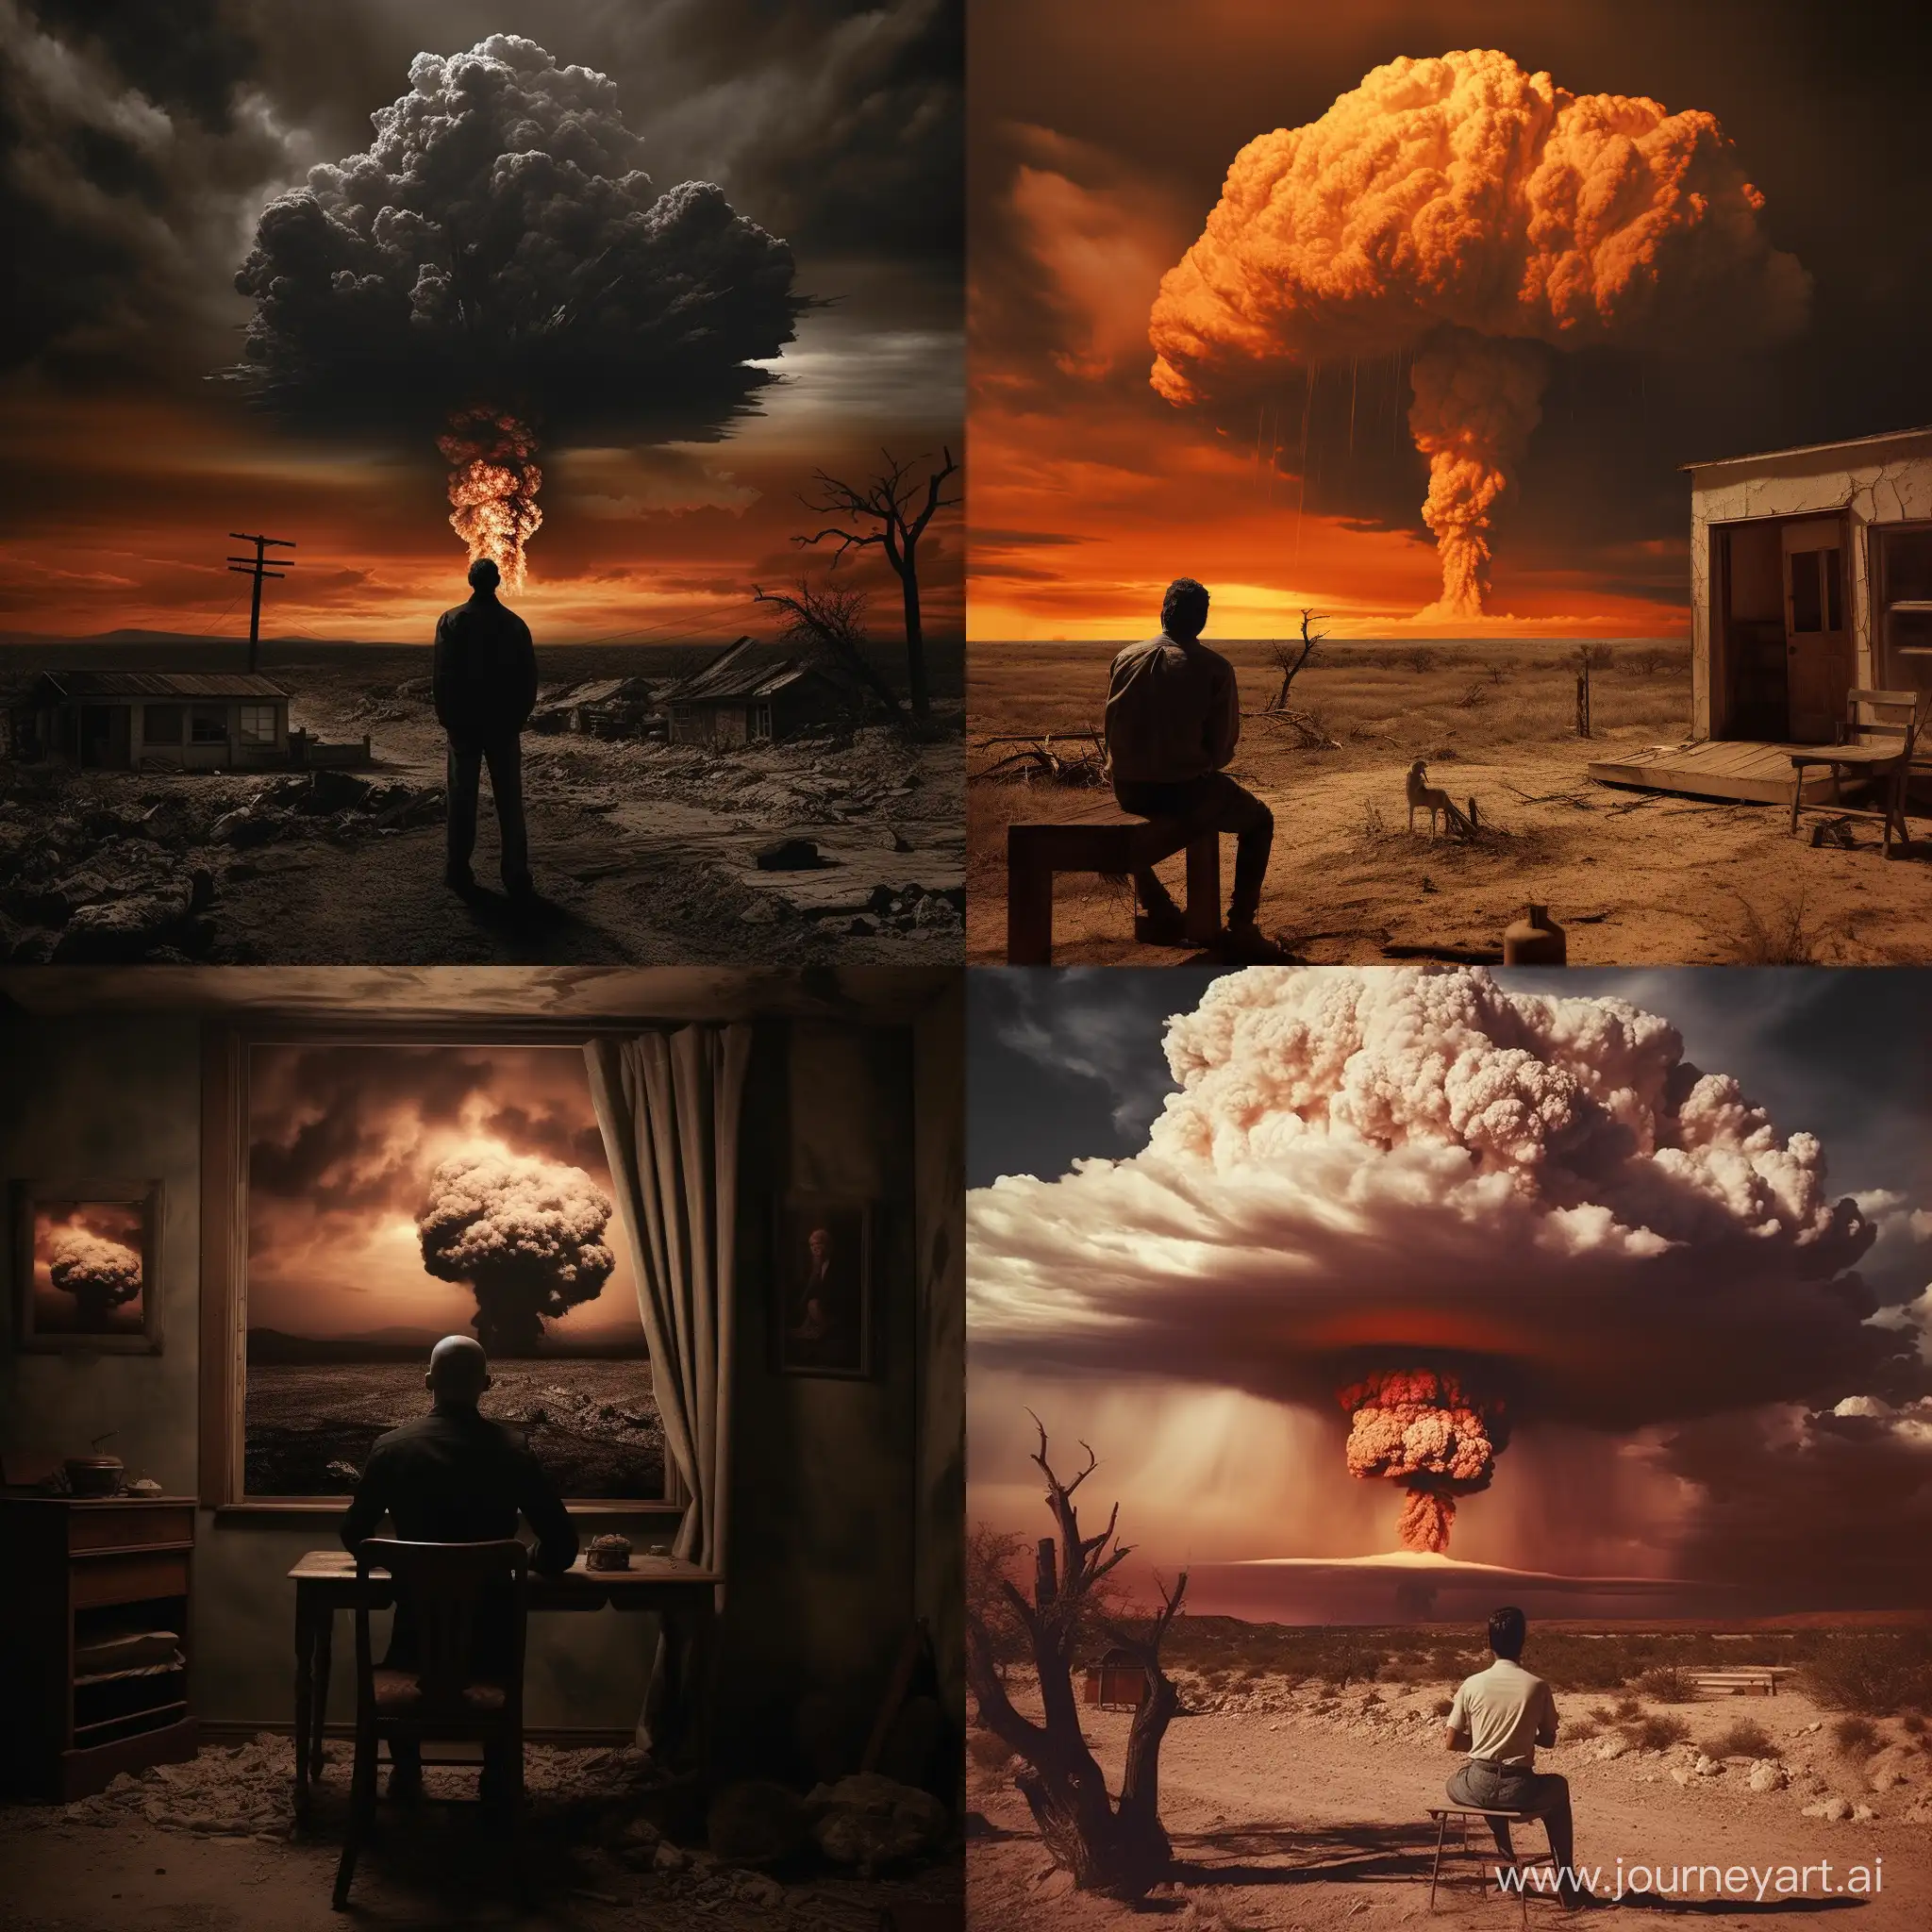 1940's american man watching nuclear bomb drop on the horizon, nuclear america, black metal album cover, dark horror